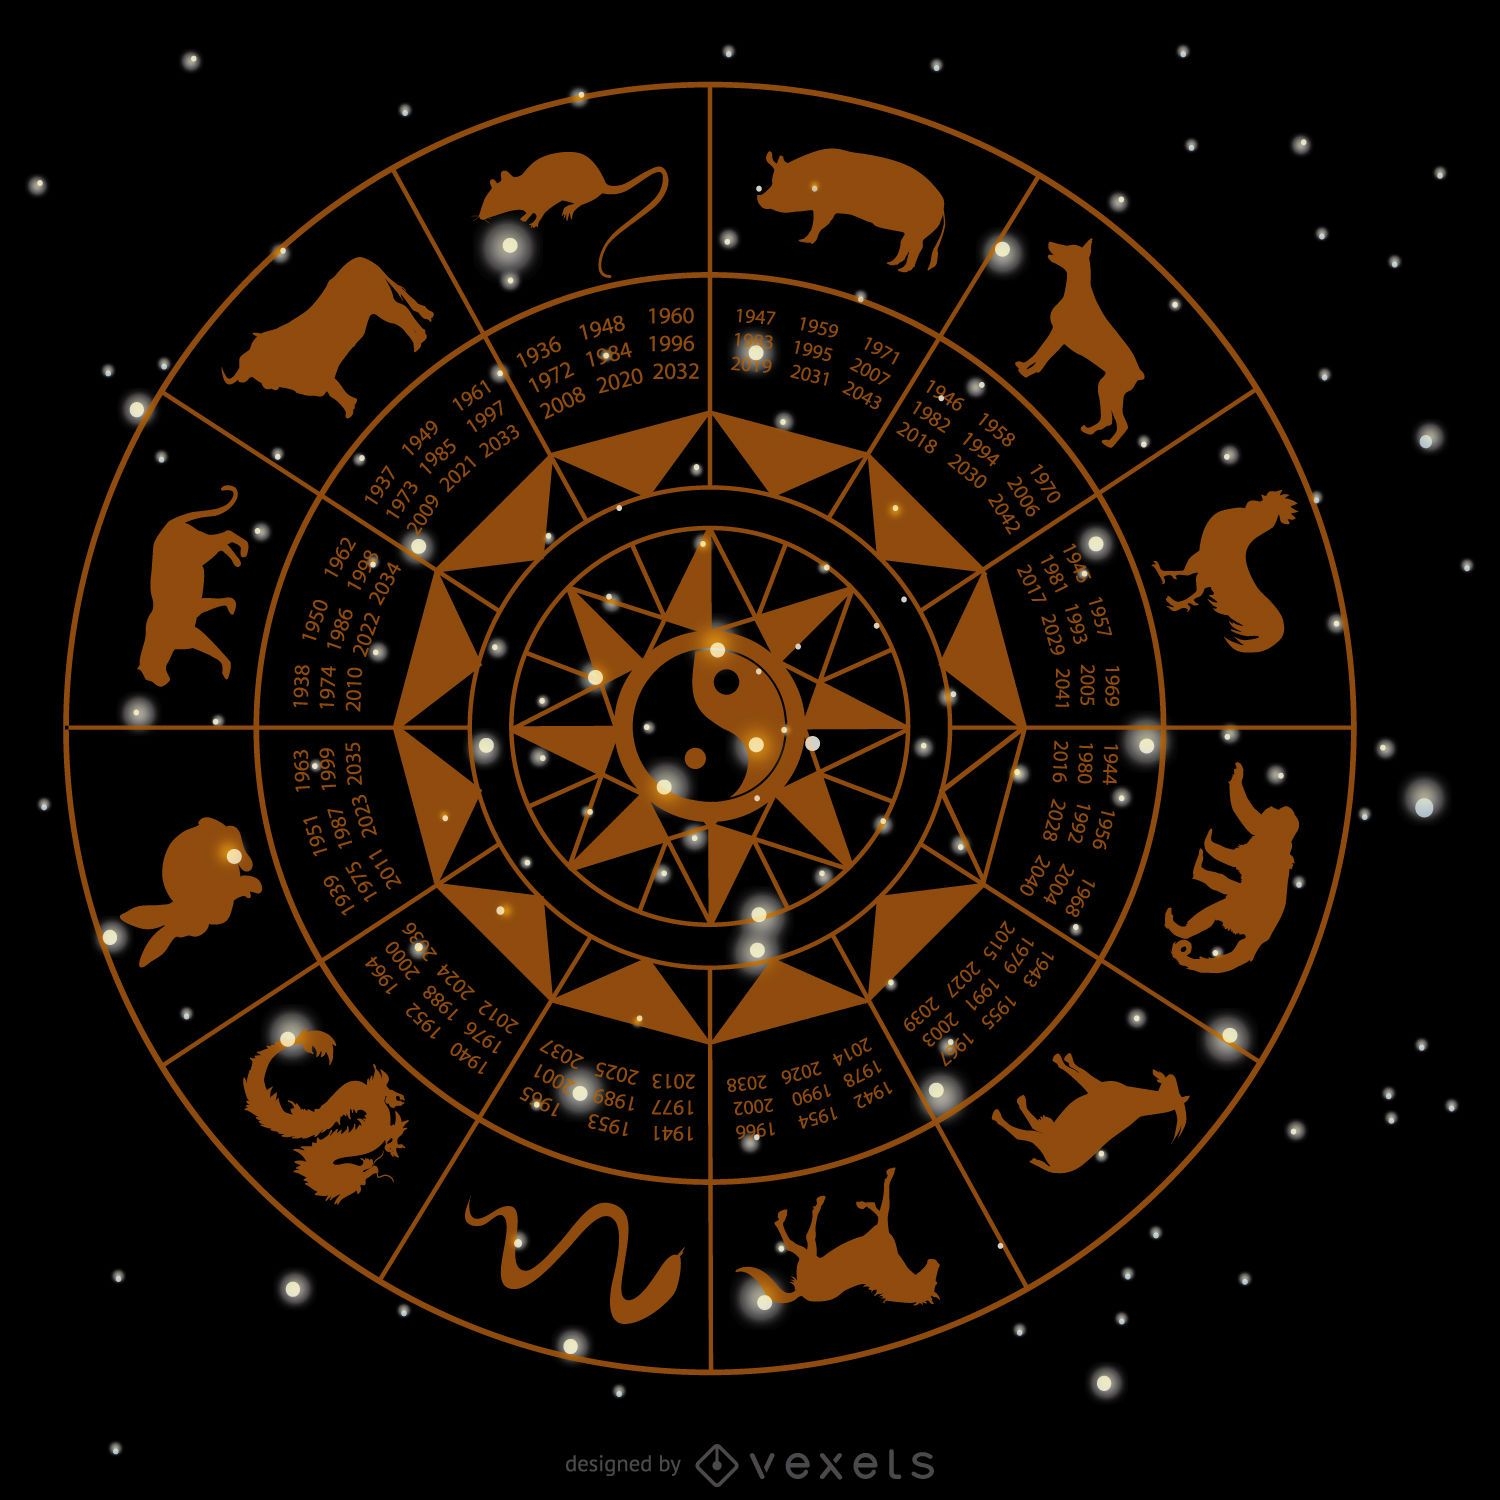 Chinese horoscope wheel drawing